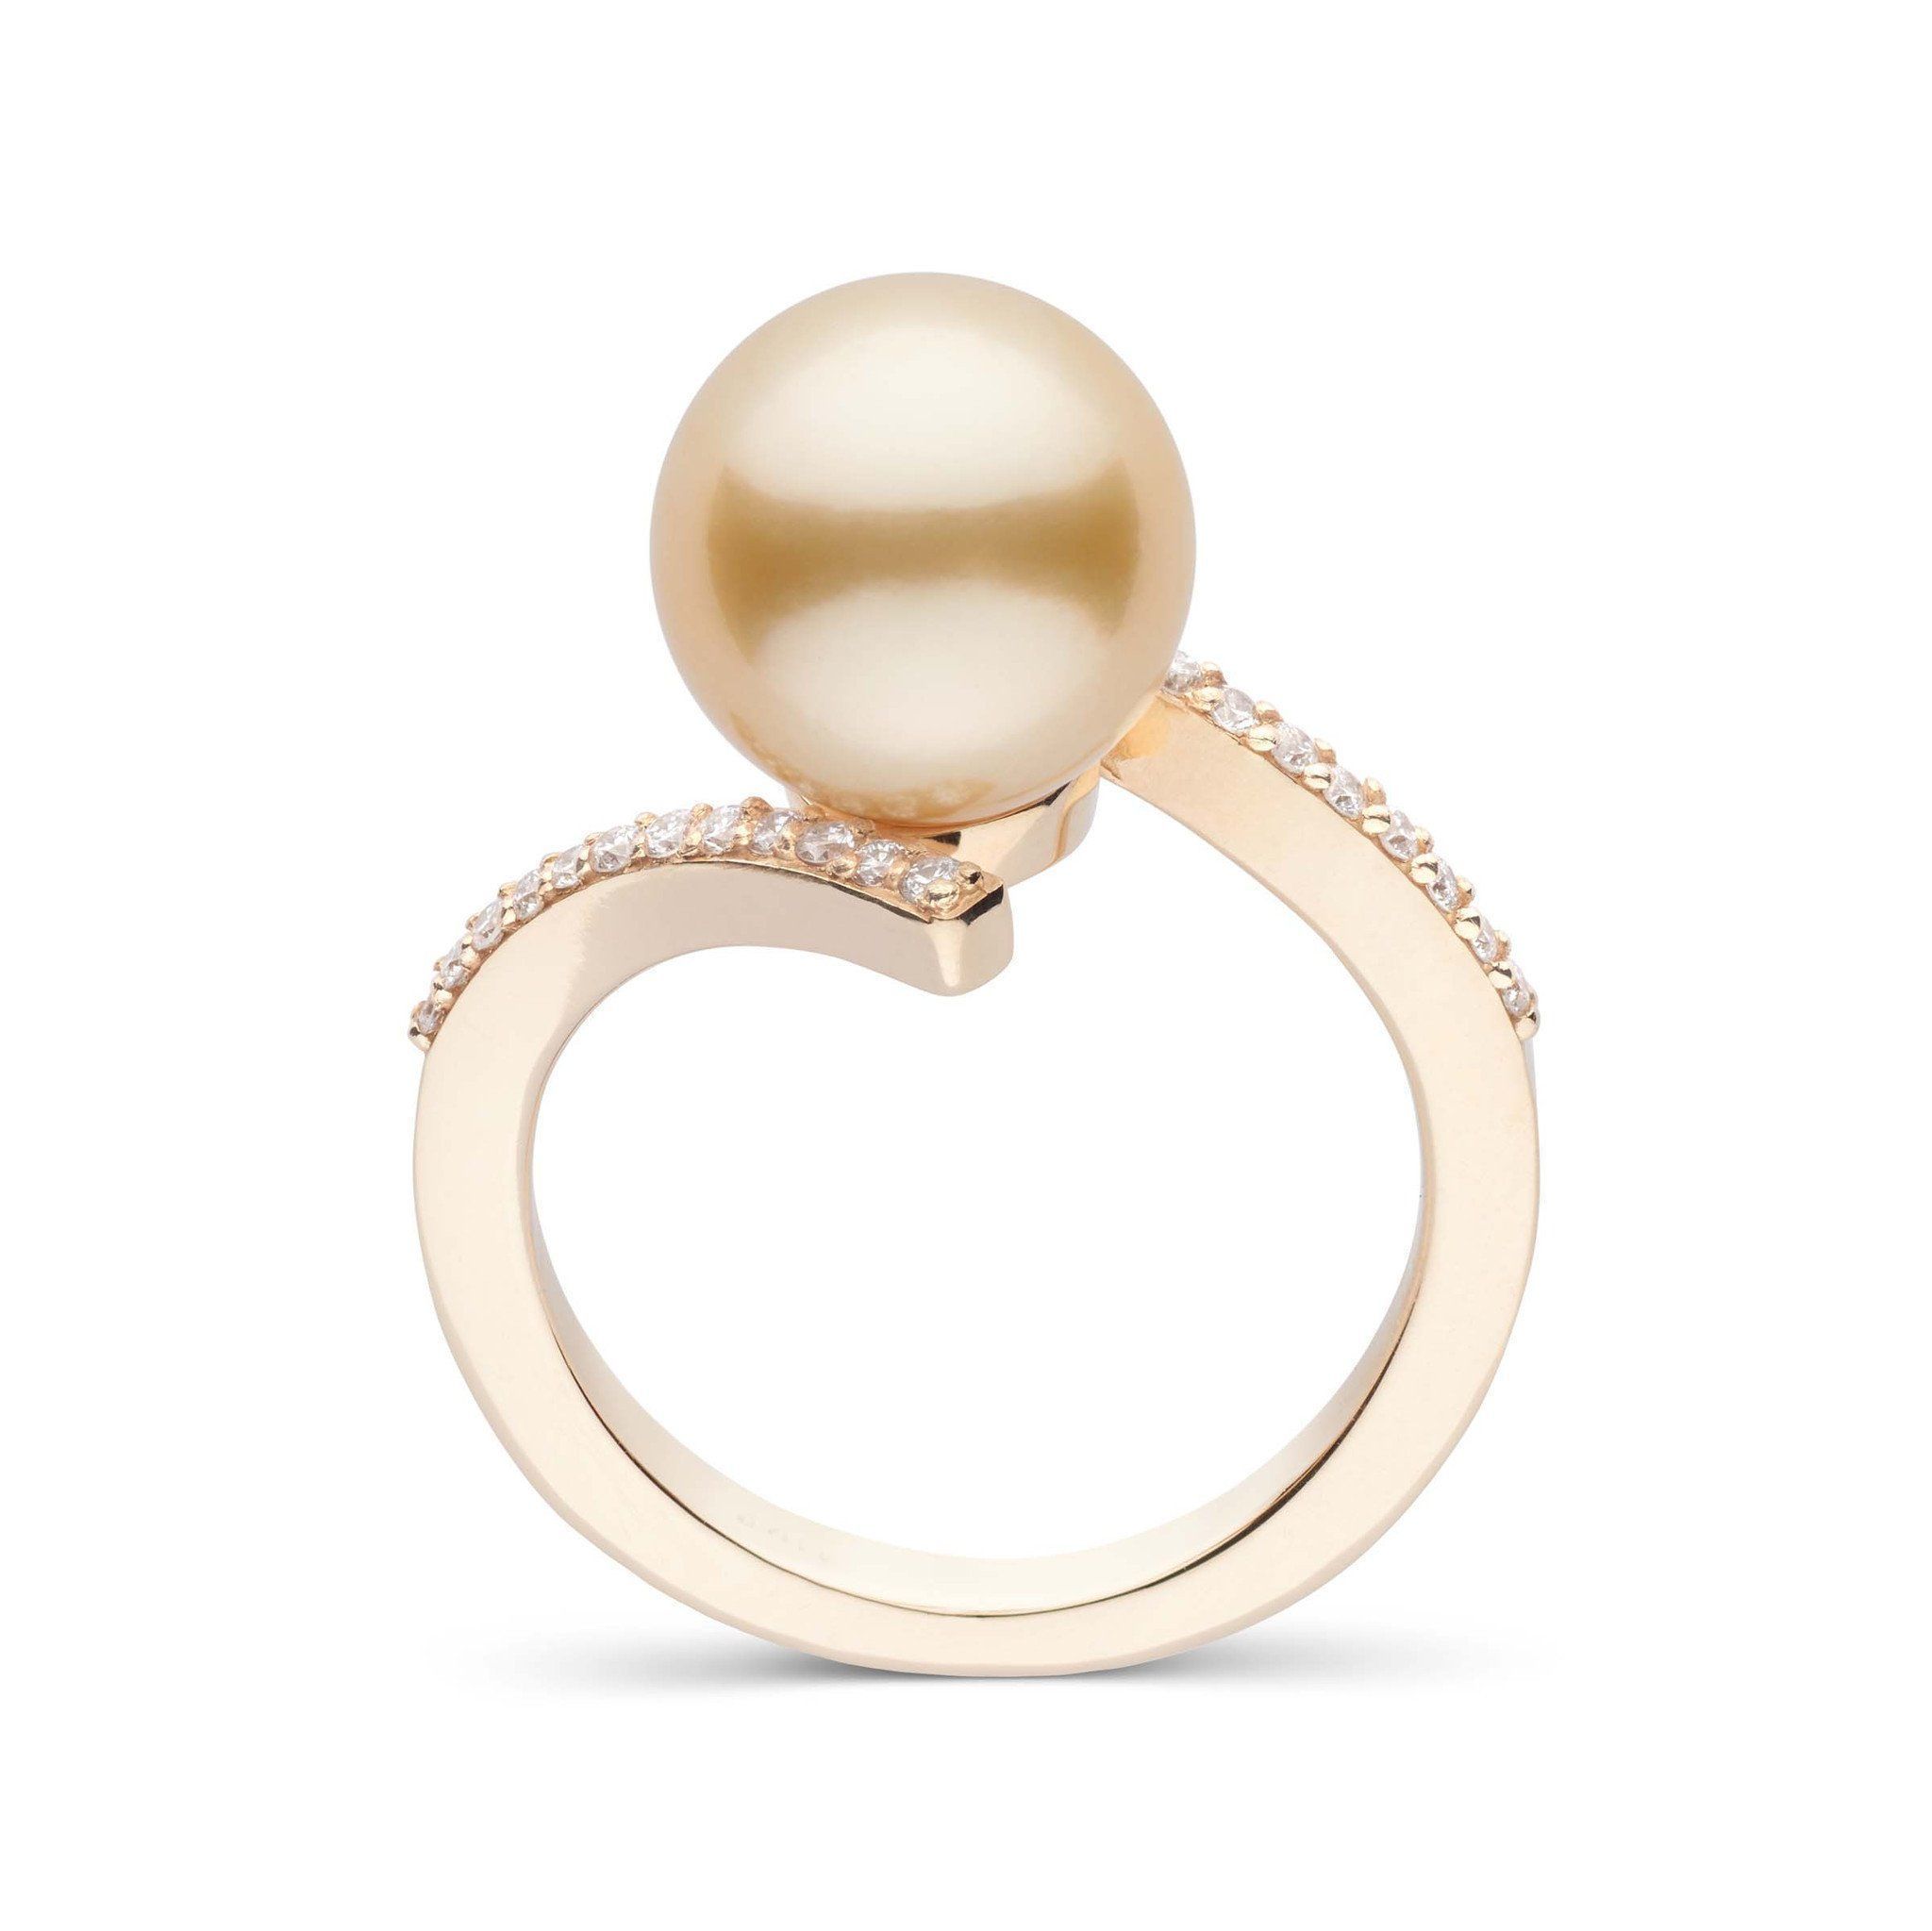 Pearl Rings - genuine, certified and guaranteed